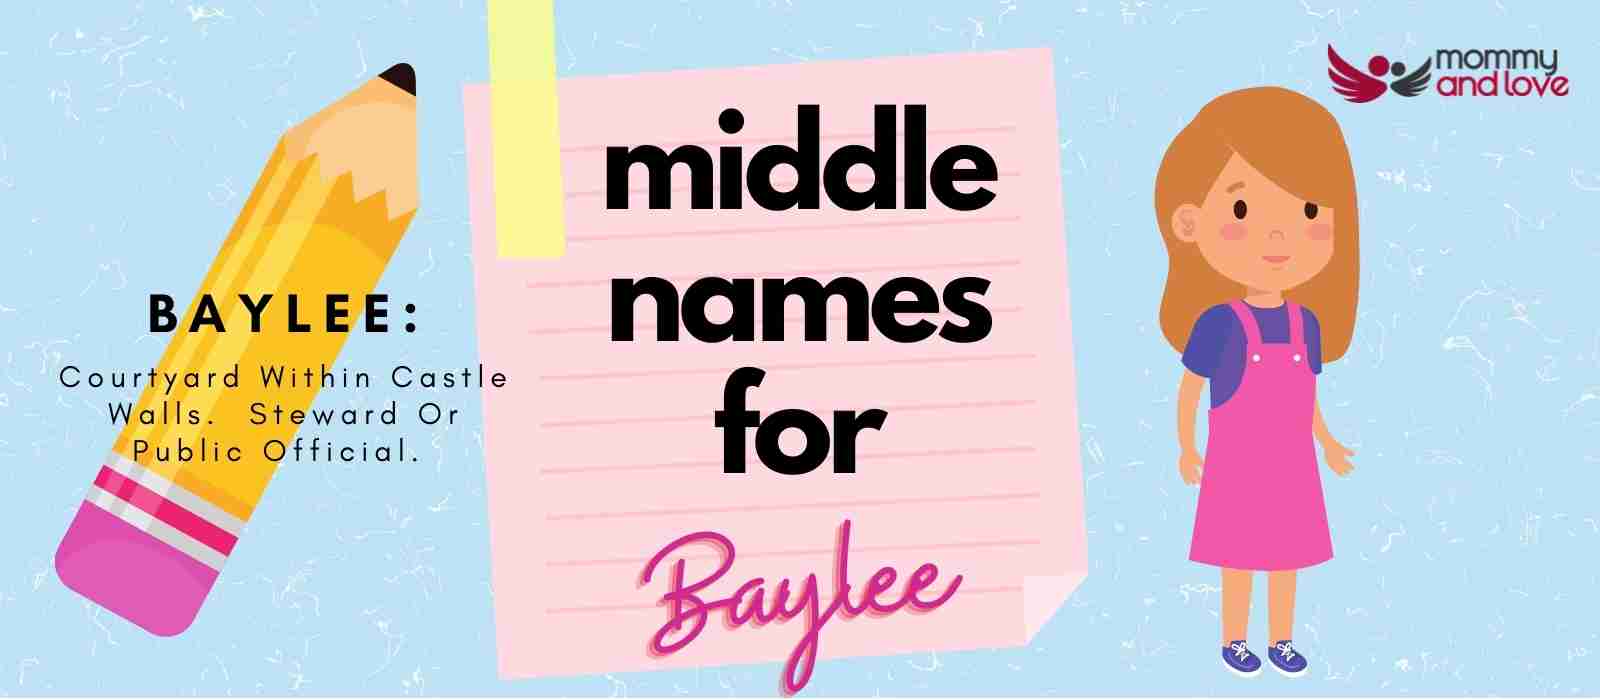 Middle Names for Baylee